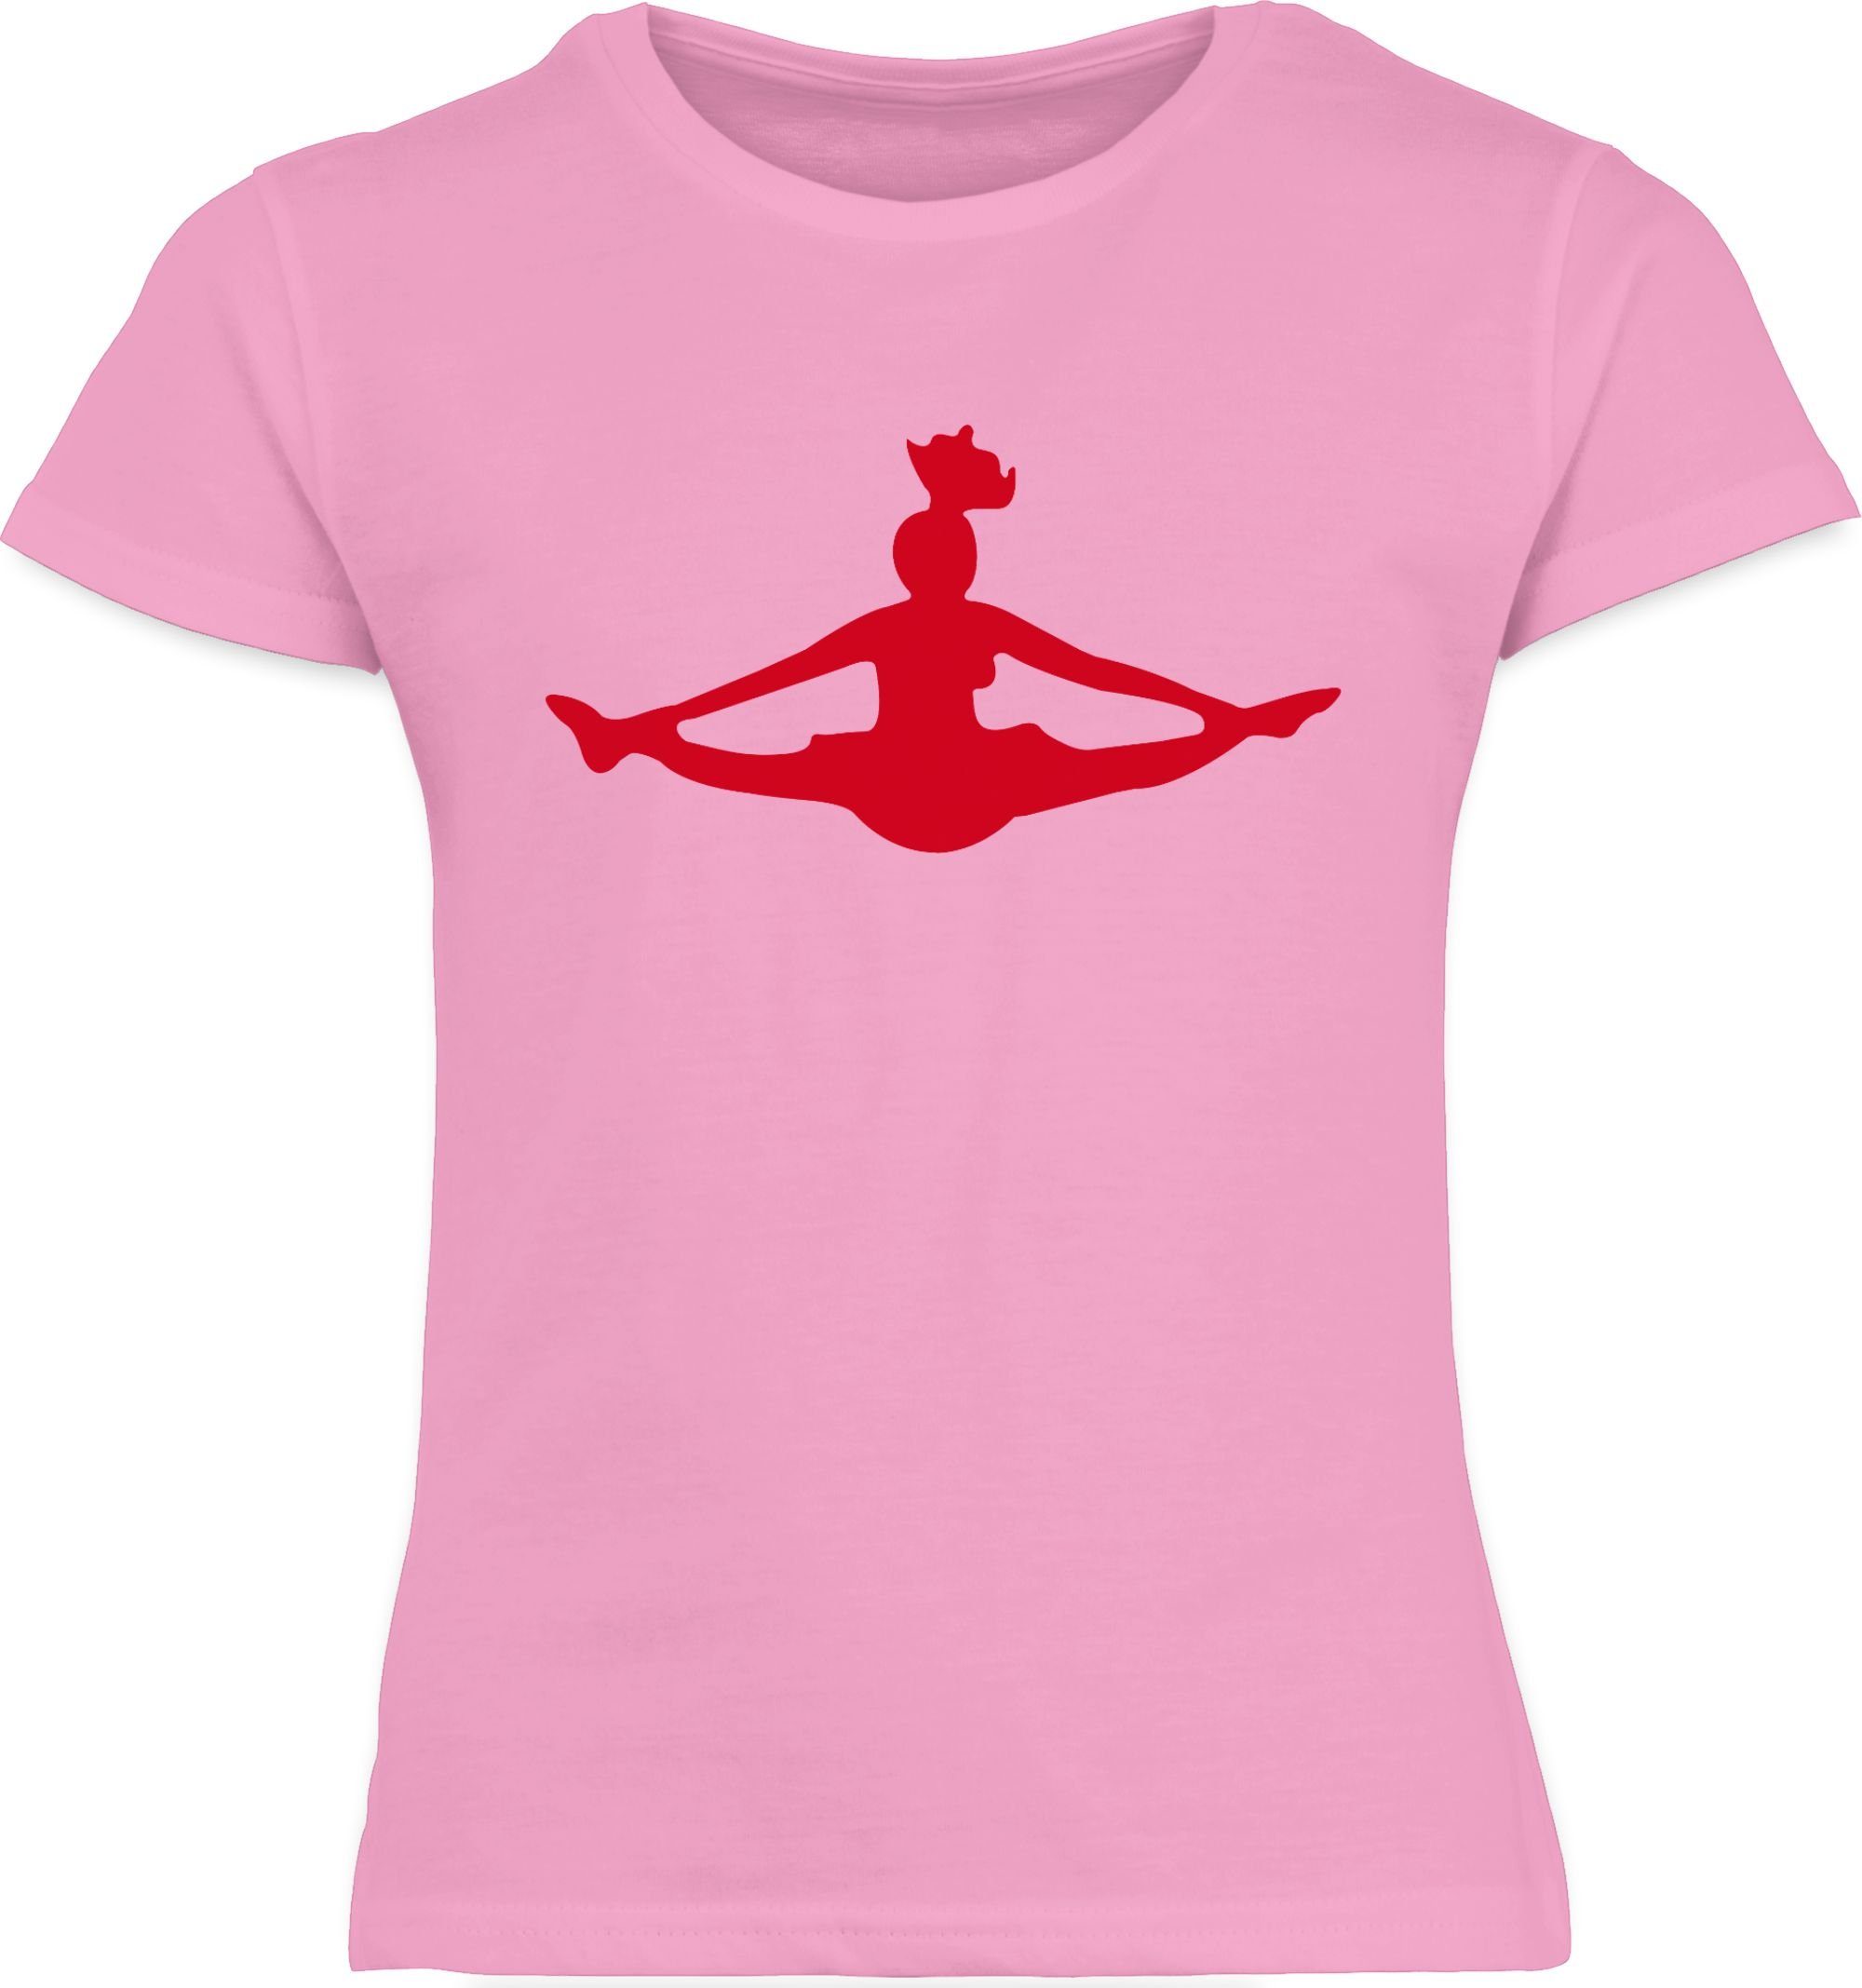 Rosa Kleidung T-Shirt Cheerleading Kinder 2 Shirtracer Sport